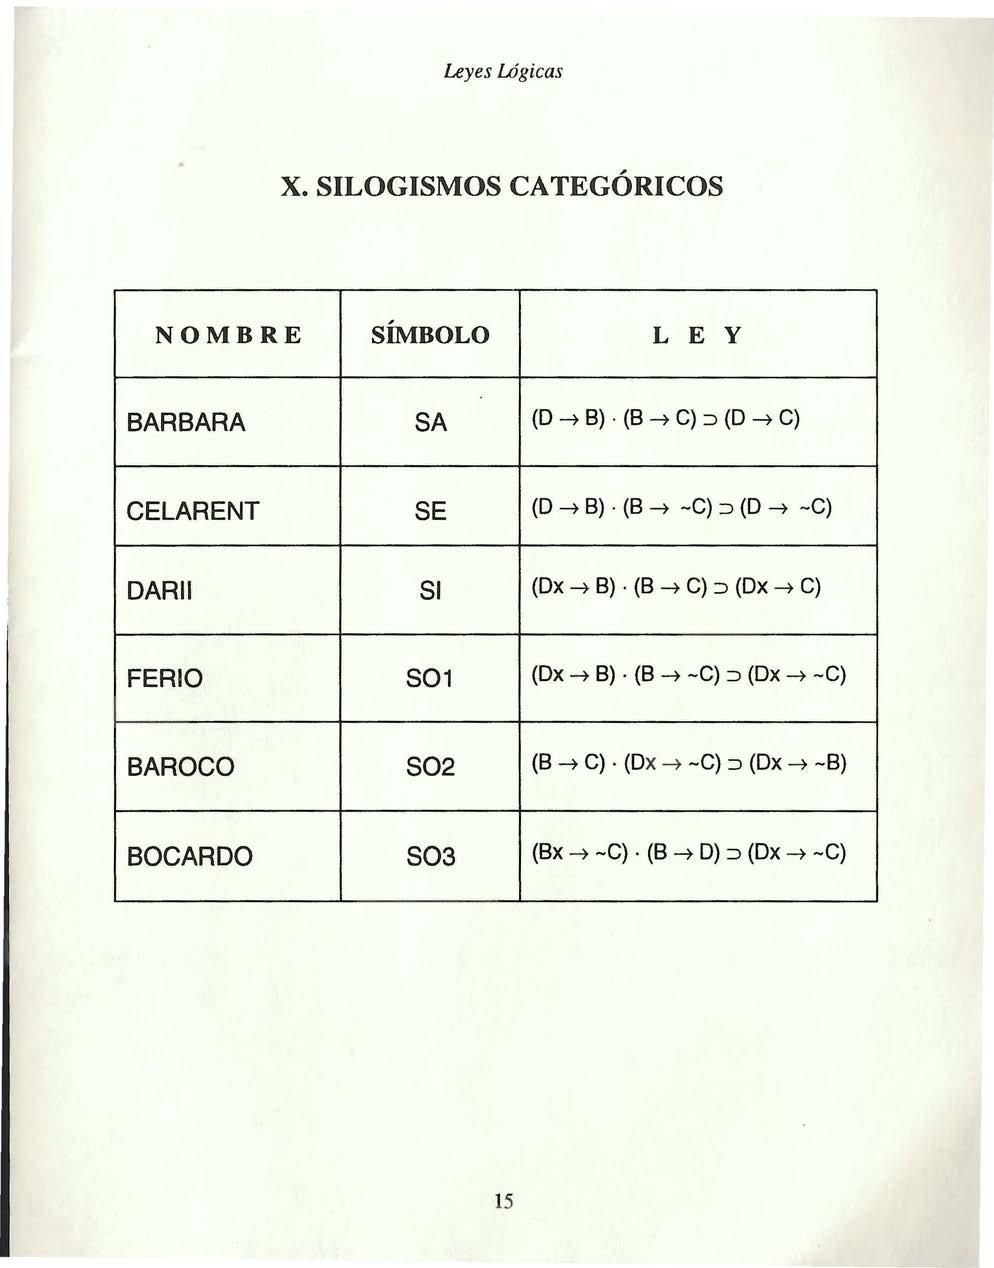 X. SILOGISMOS CATEGORICOS NOMBRE SIMBOLO L E Y BARBARA SA (D 4 B) (B 4 C) :::> (D 4 C) CELARENT SE (D 4 B) (B 4 -C) :::> (D 4 -C) DAR II Sl (Dx 4 B) (B